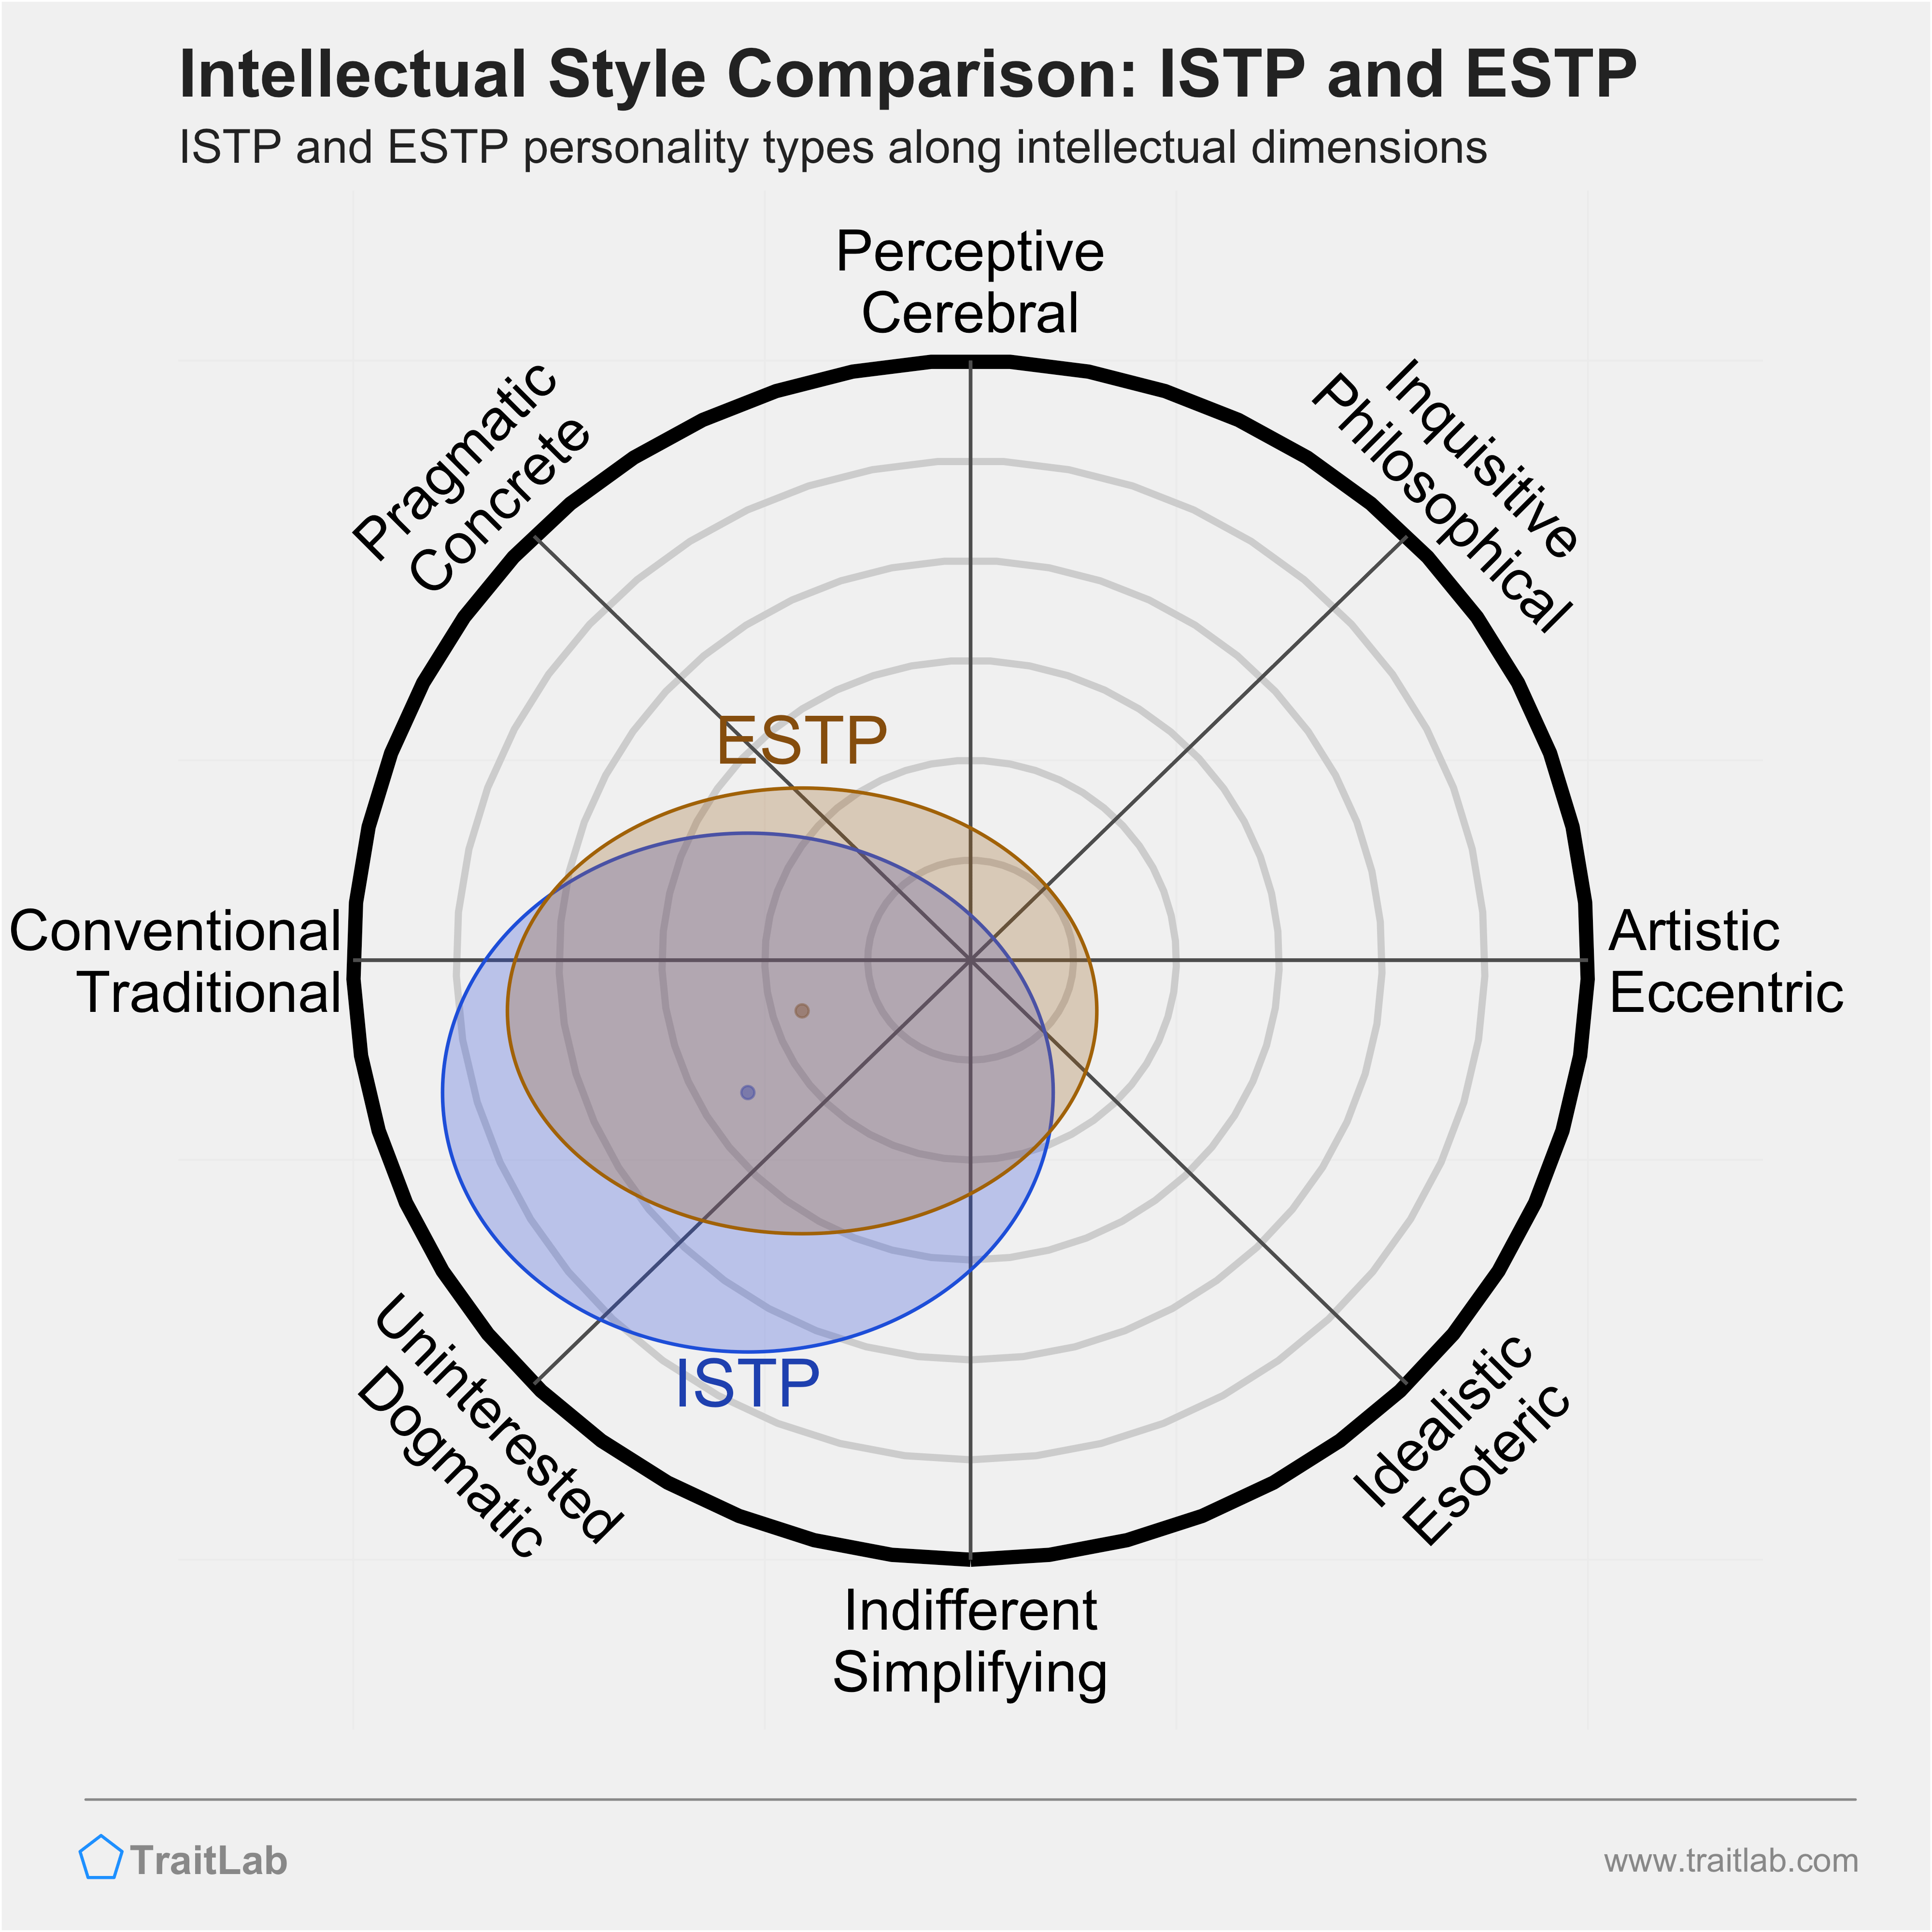 ISTP and ESTP comparison across intellectual dimensions